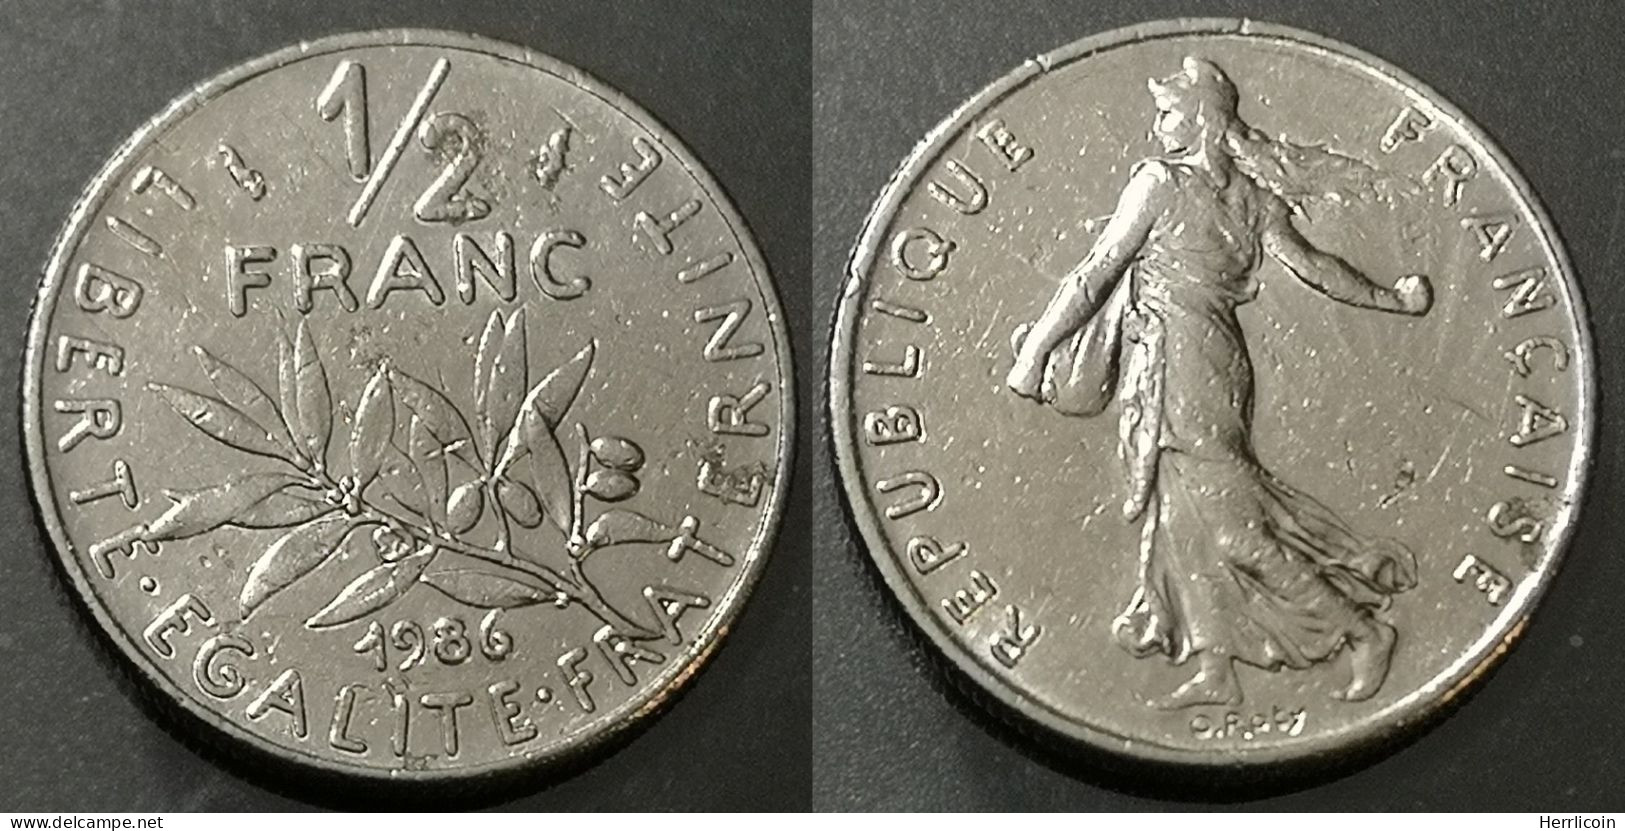 Monnaie France - 1965 - Demi Franc Semeuse O.Roty, Tranche Striée, Nickel - 1/2 Franc